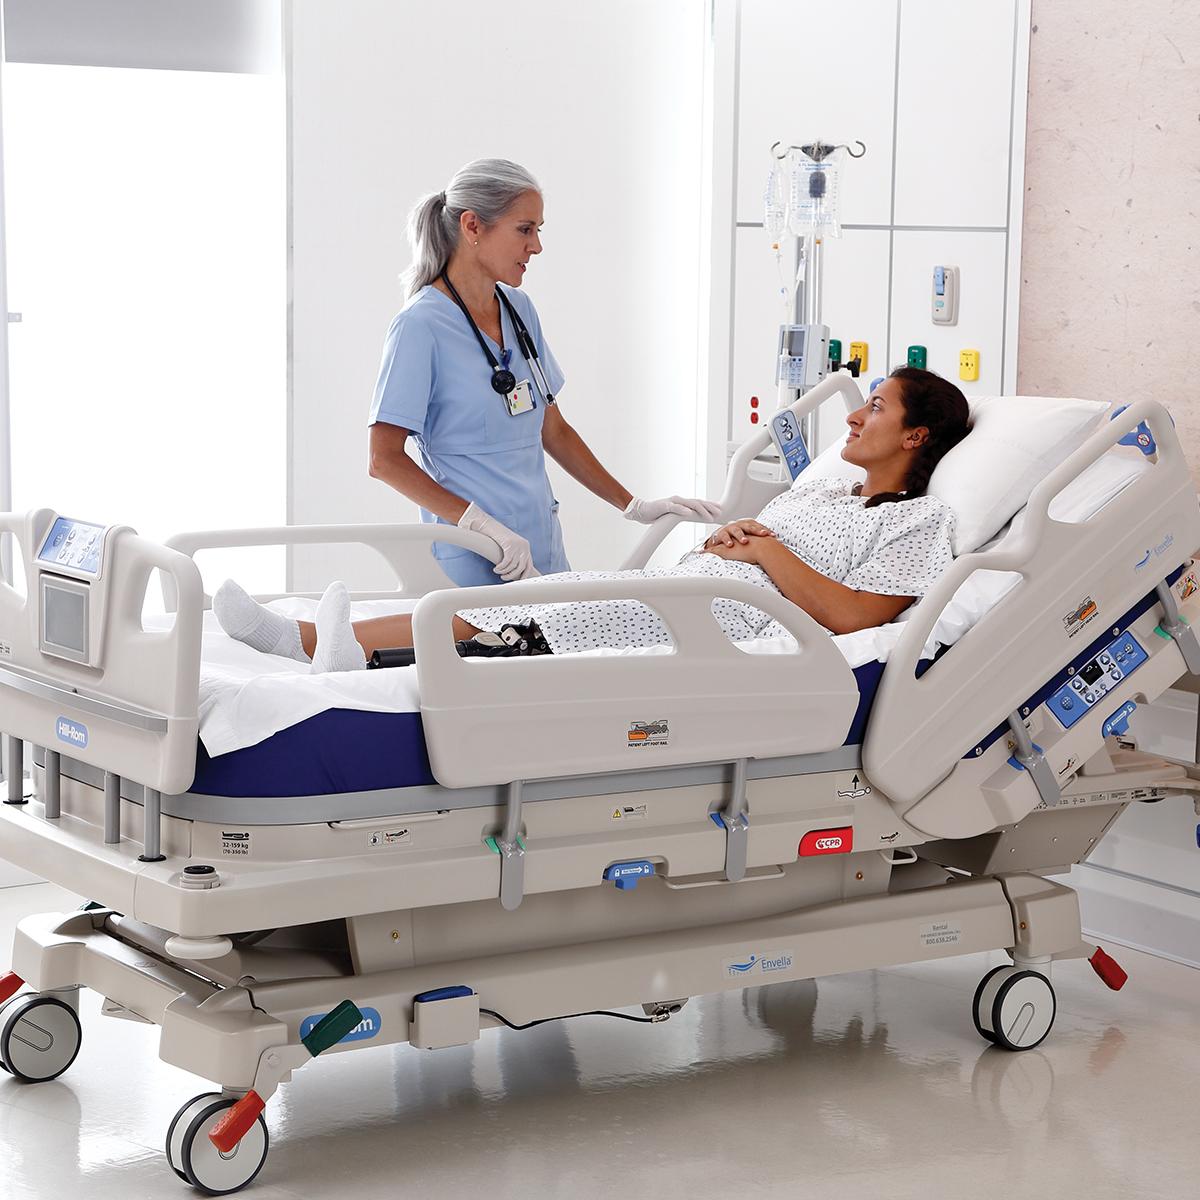 HomeCare Hospital Beds - Home Medical Equipment